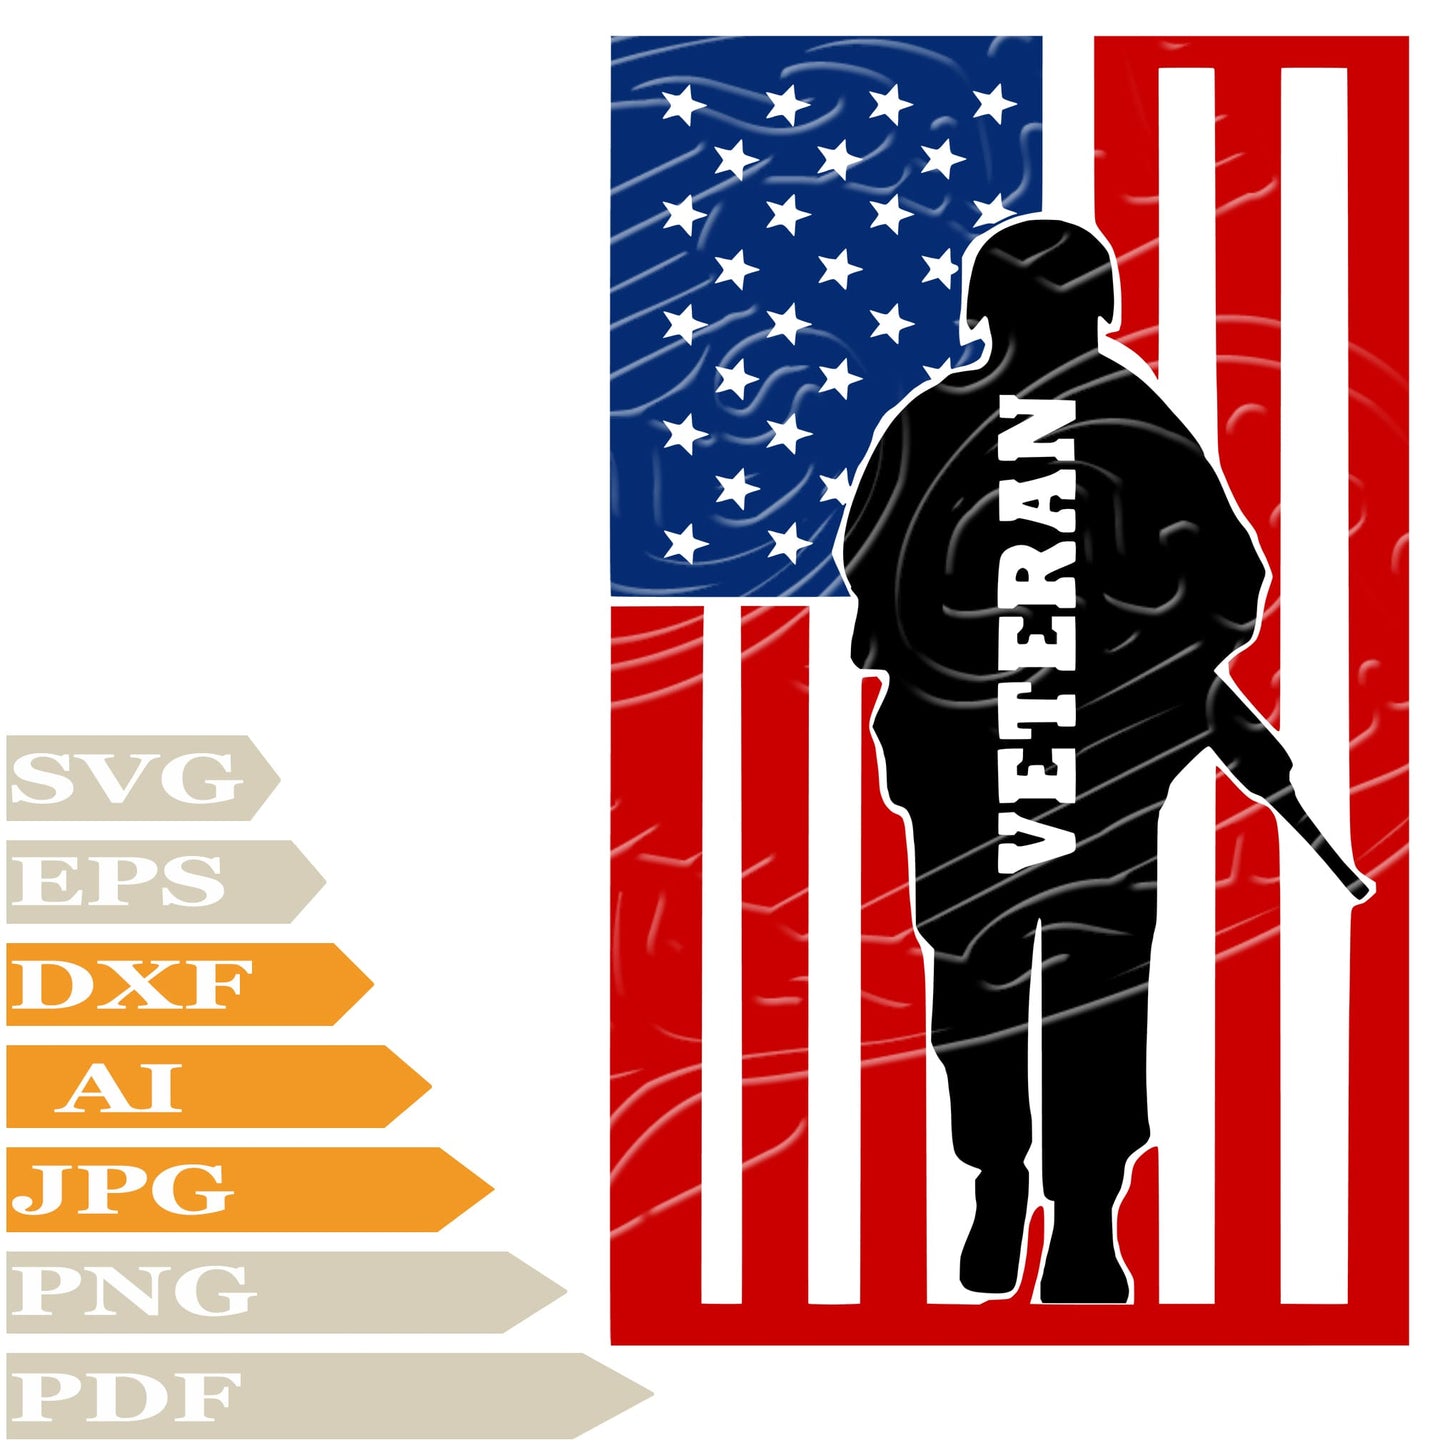 Soldier Svg File, American Soldier Svg Design, Soldier With Flag Png, Soldier War Hero Vector Graphics, Soldier With Flag Svg For Tattoo, American Soldier Svg For Cricut